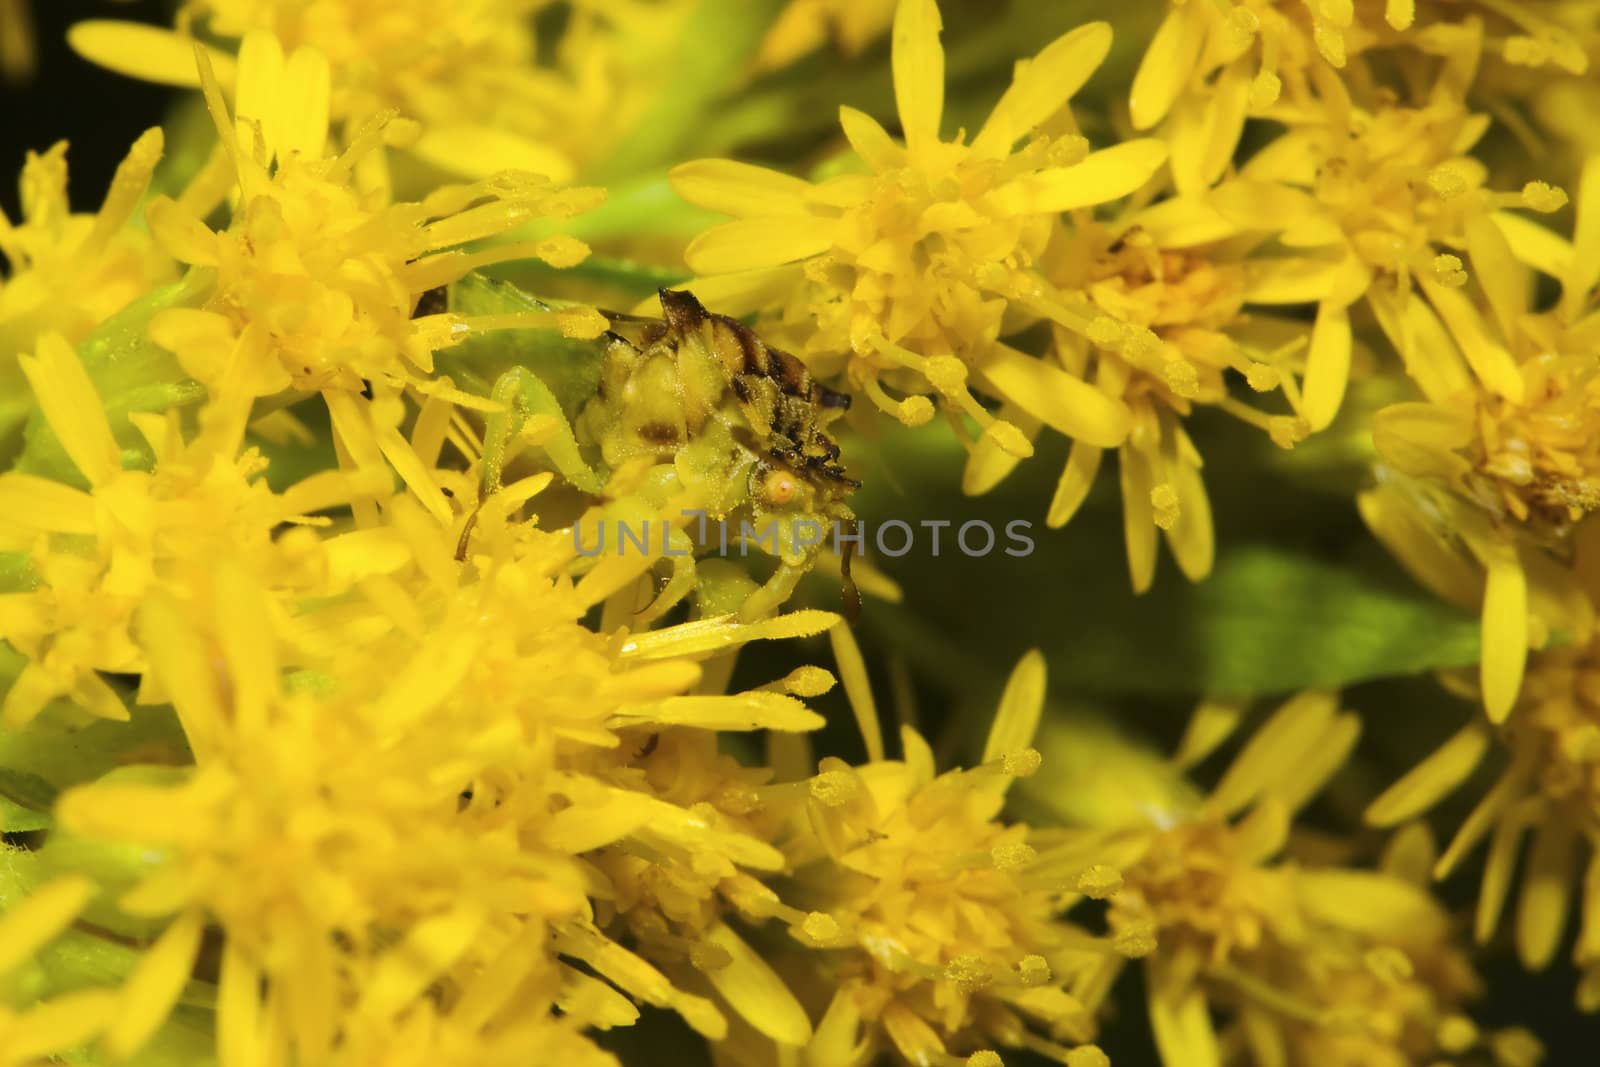 Mating Ambush bugs (Phymata erosa) in goldenrod flowers.